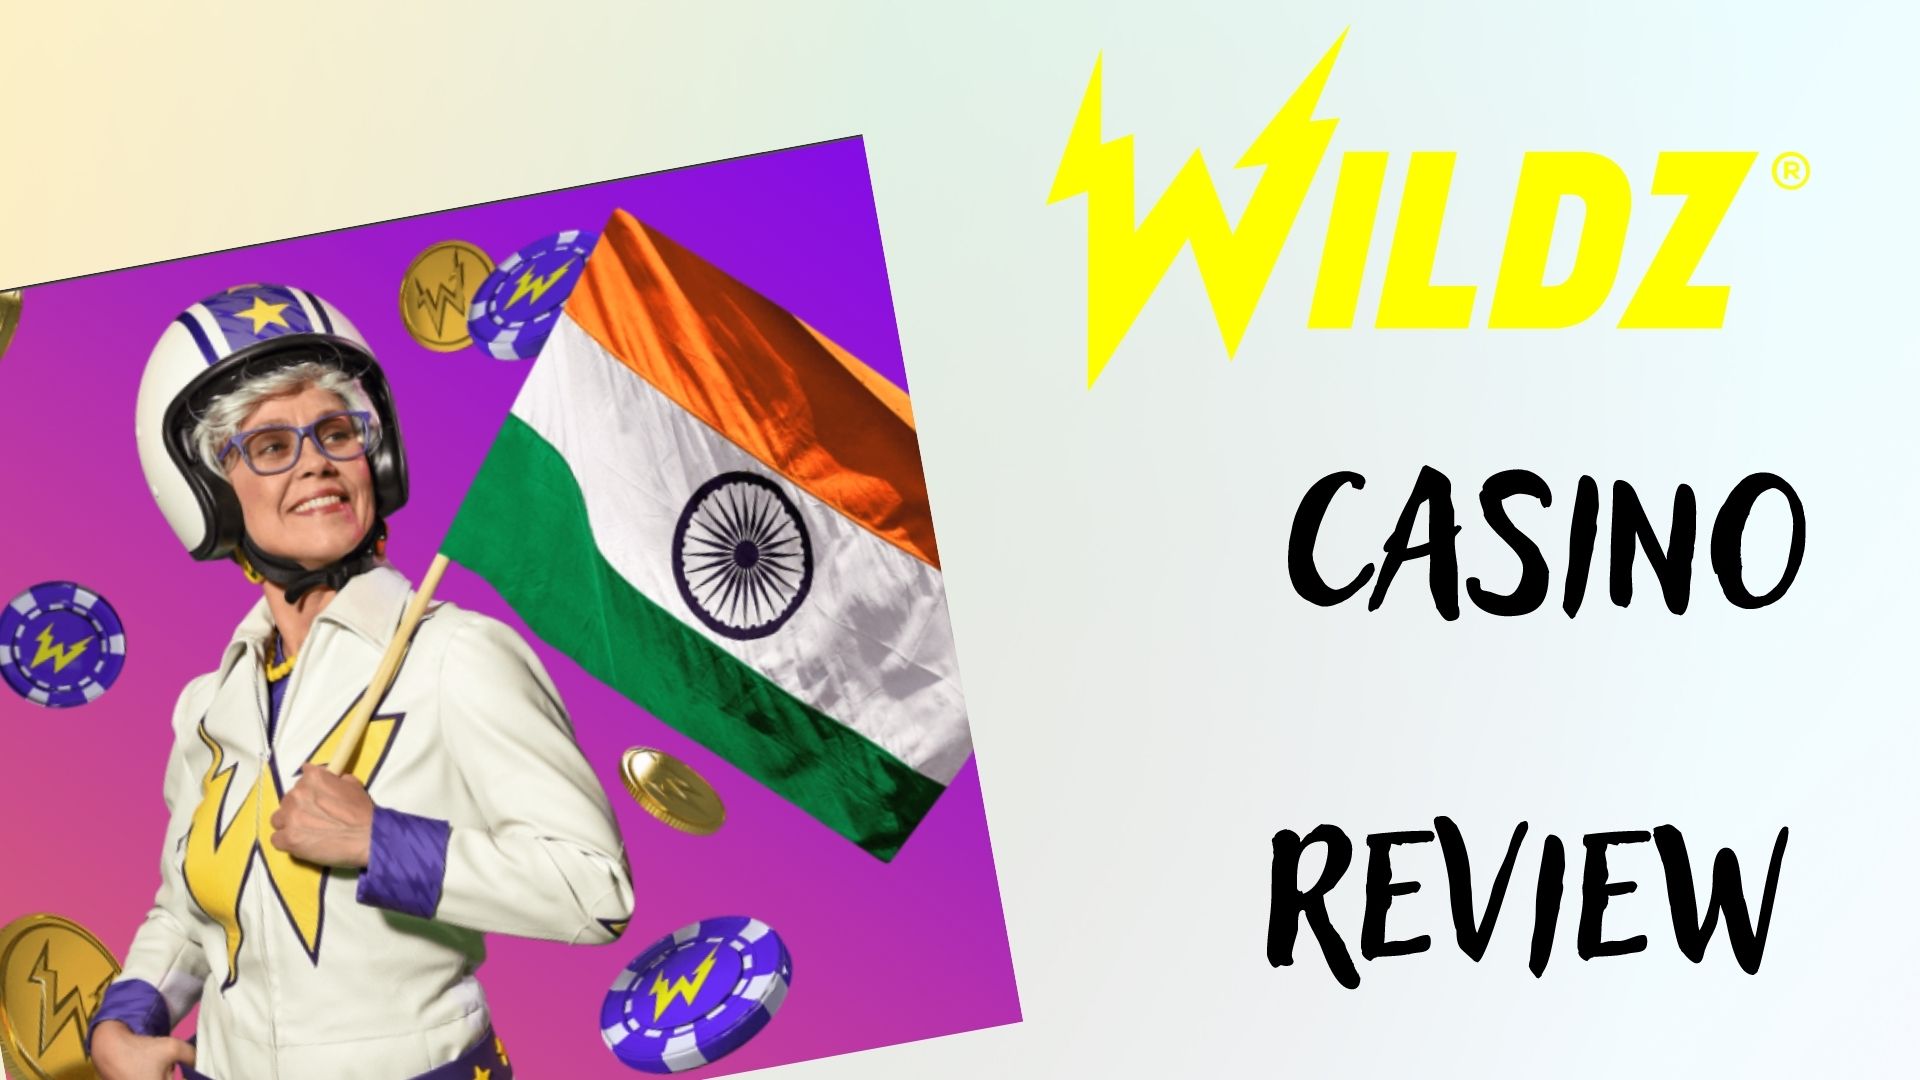 Wildz Casino Review 2022 – Main Information